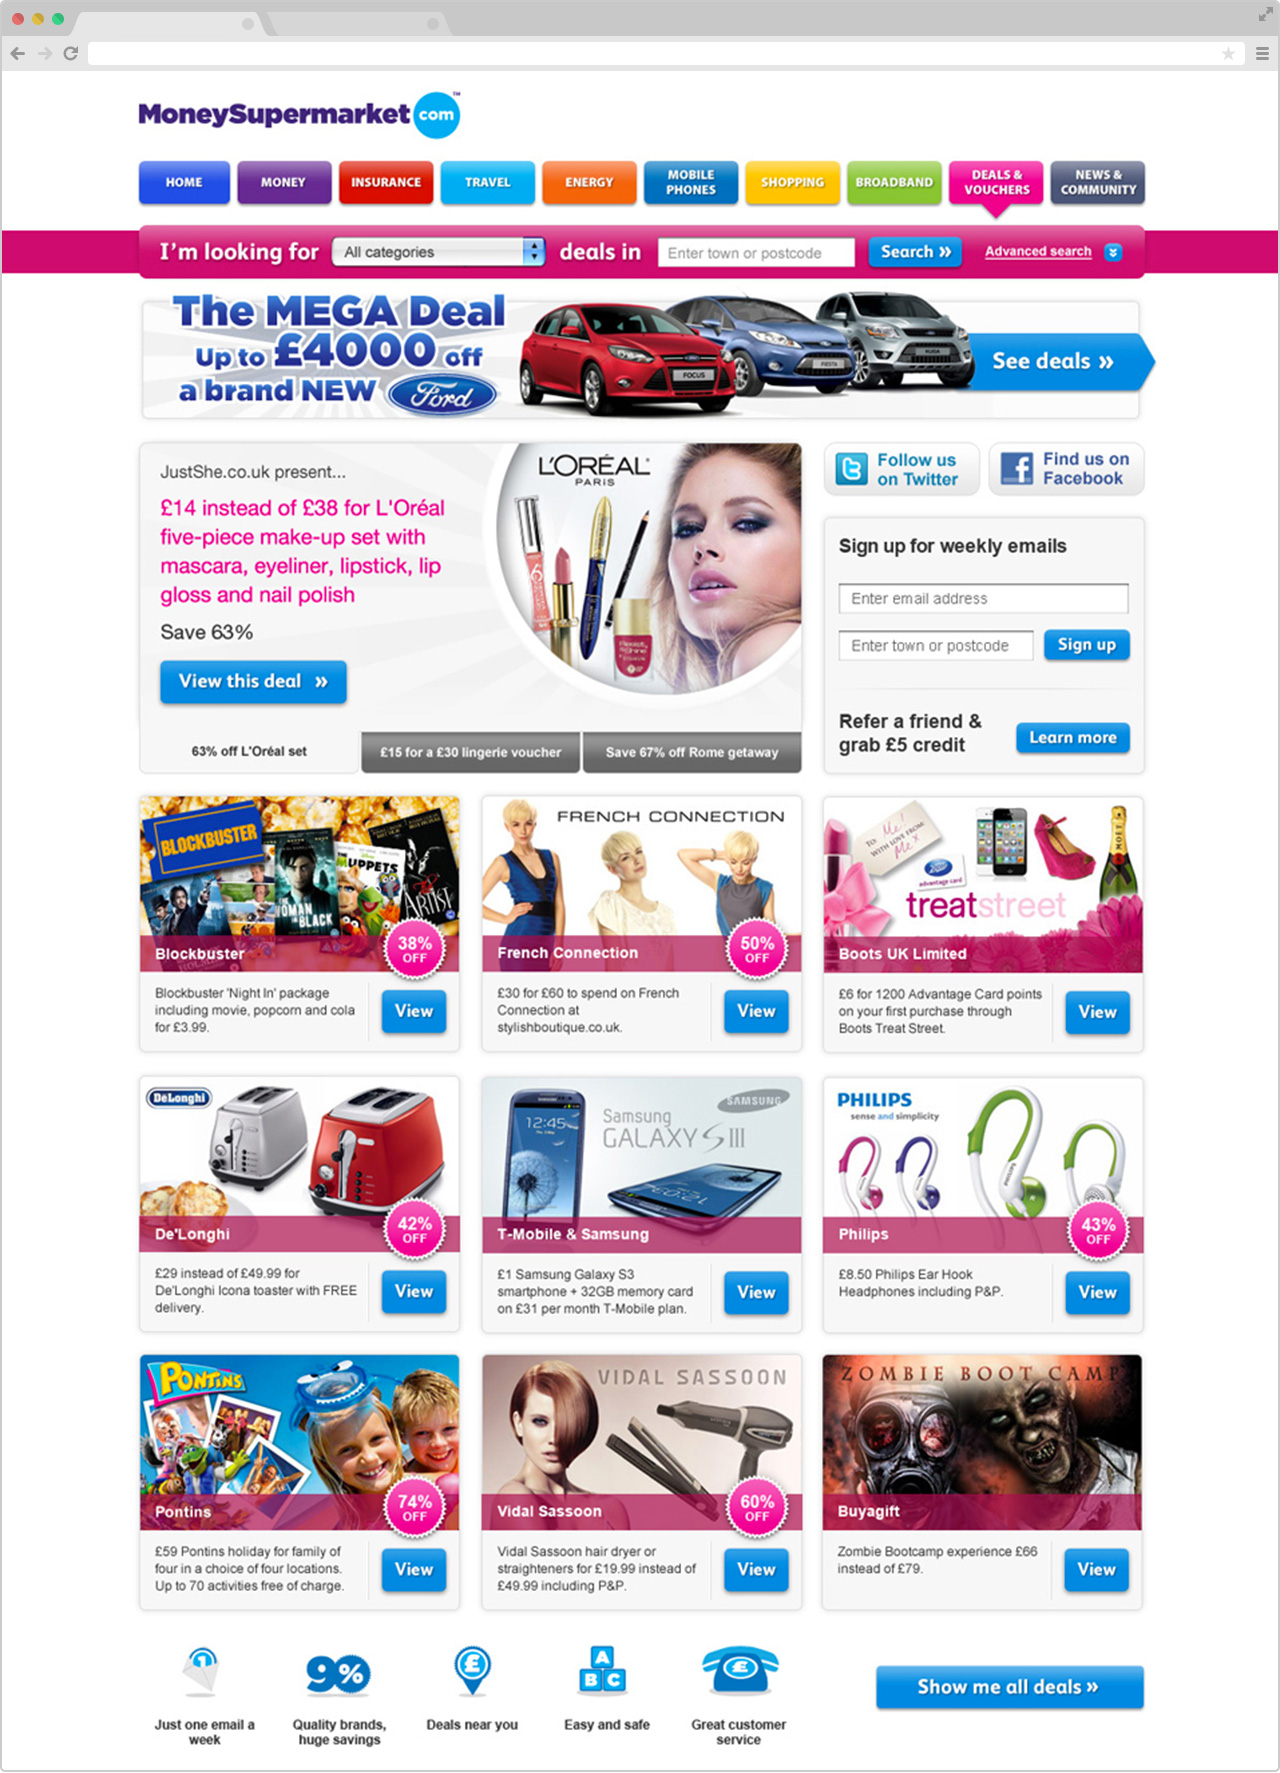 MoneySupermarket Deals Homepage Design, 2013